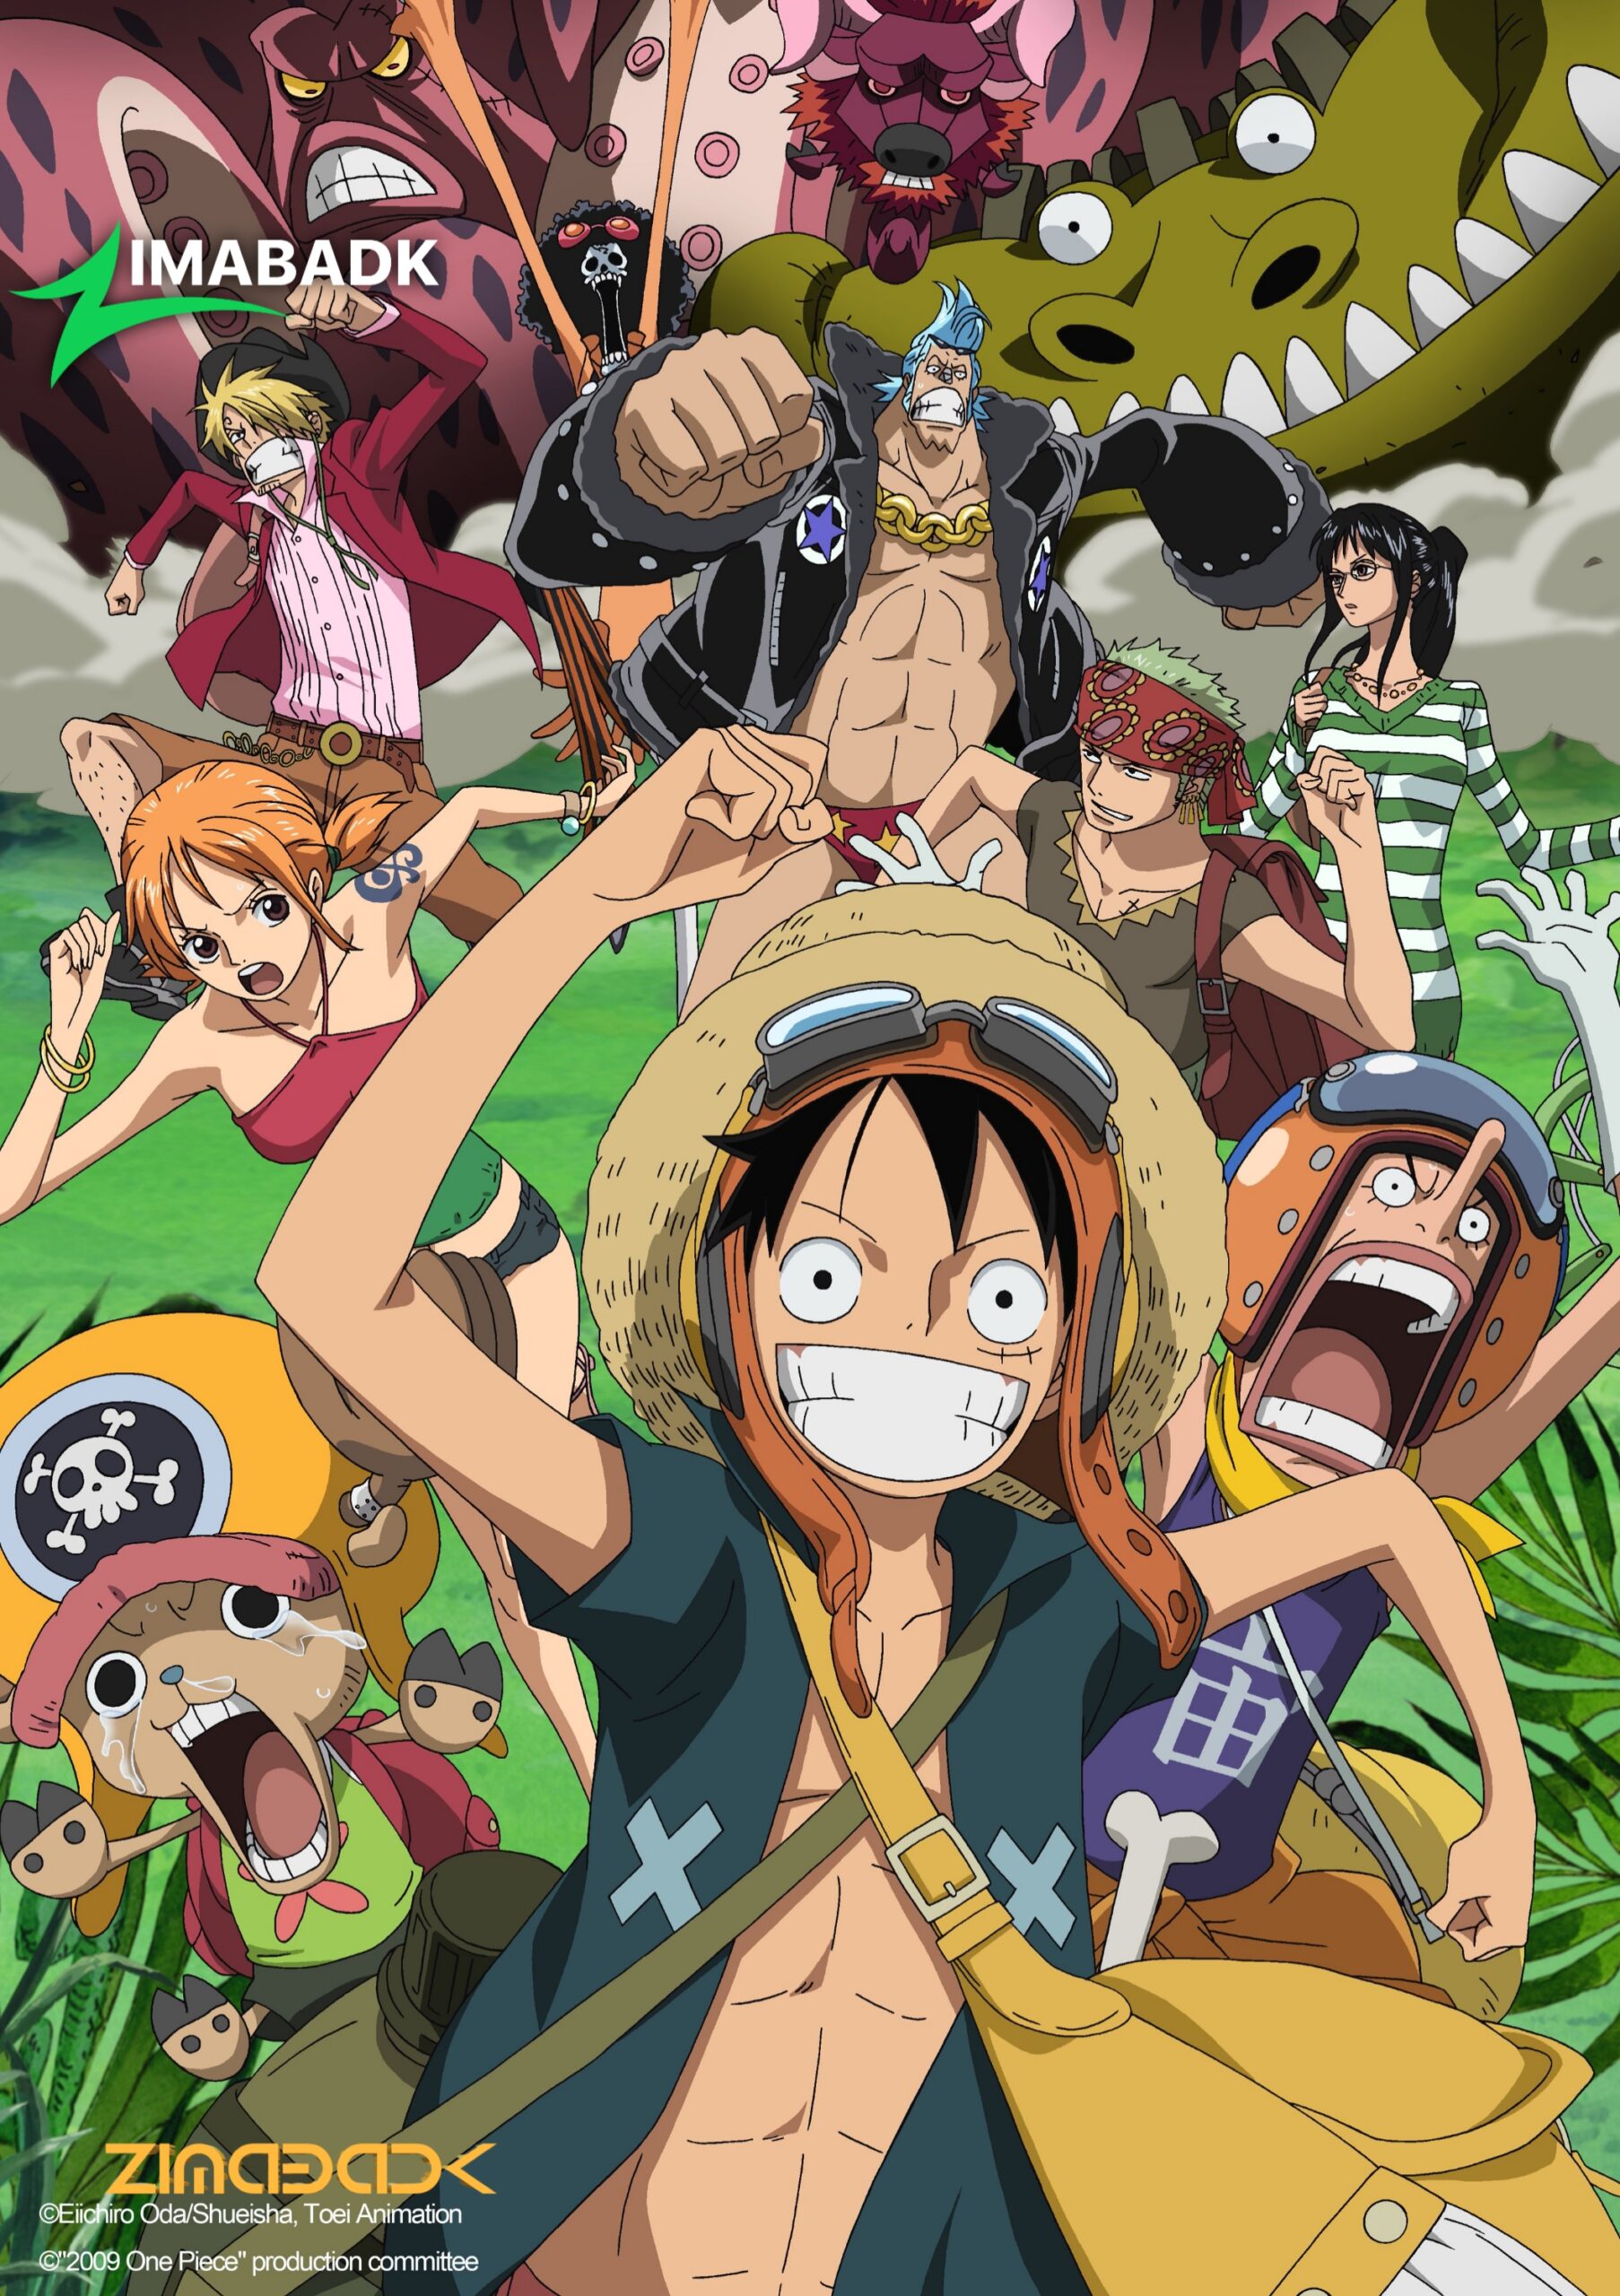 فيلم One Piece Film: Strong World مترجم